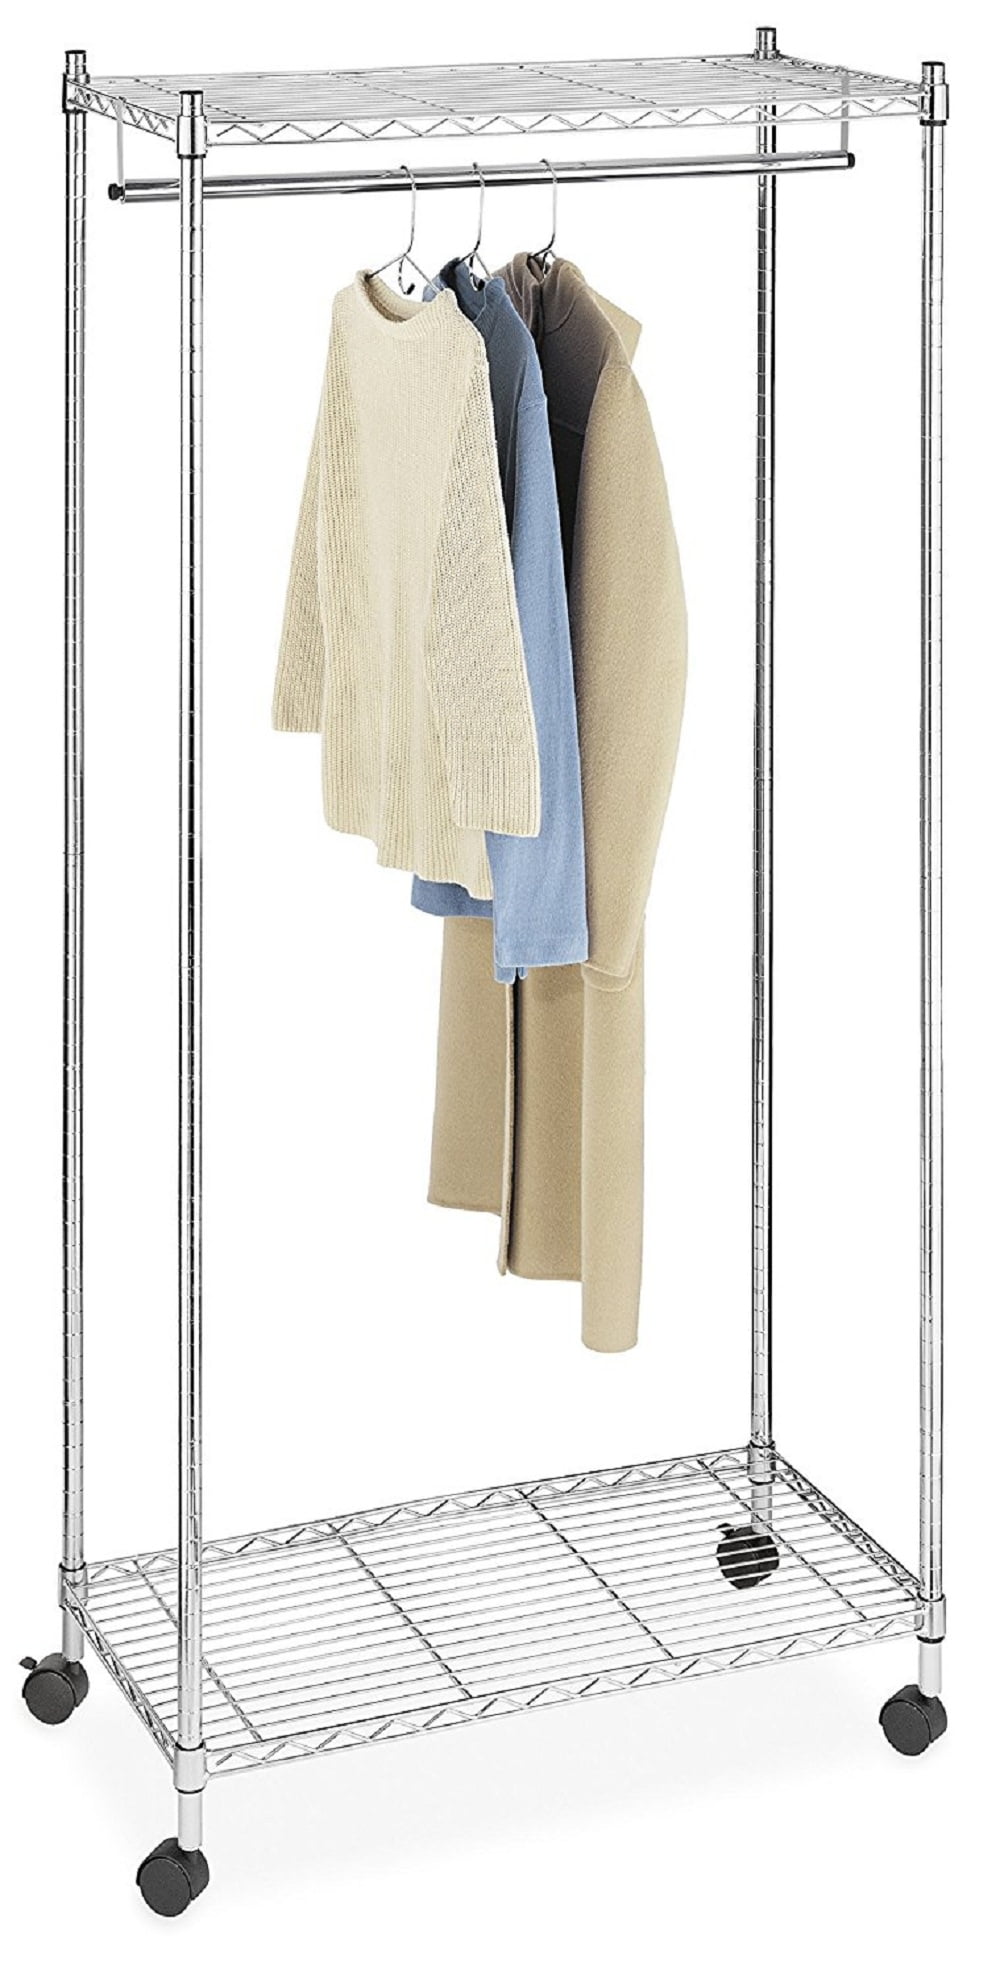 600lbs Adjustable Collapsible Clothes Hanger Rolling Garment Rack Shelf Rack US 